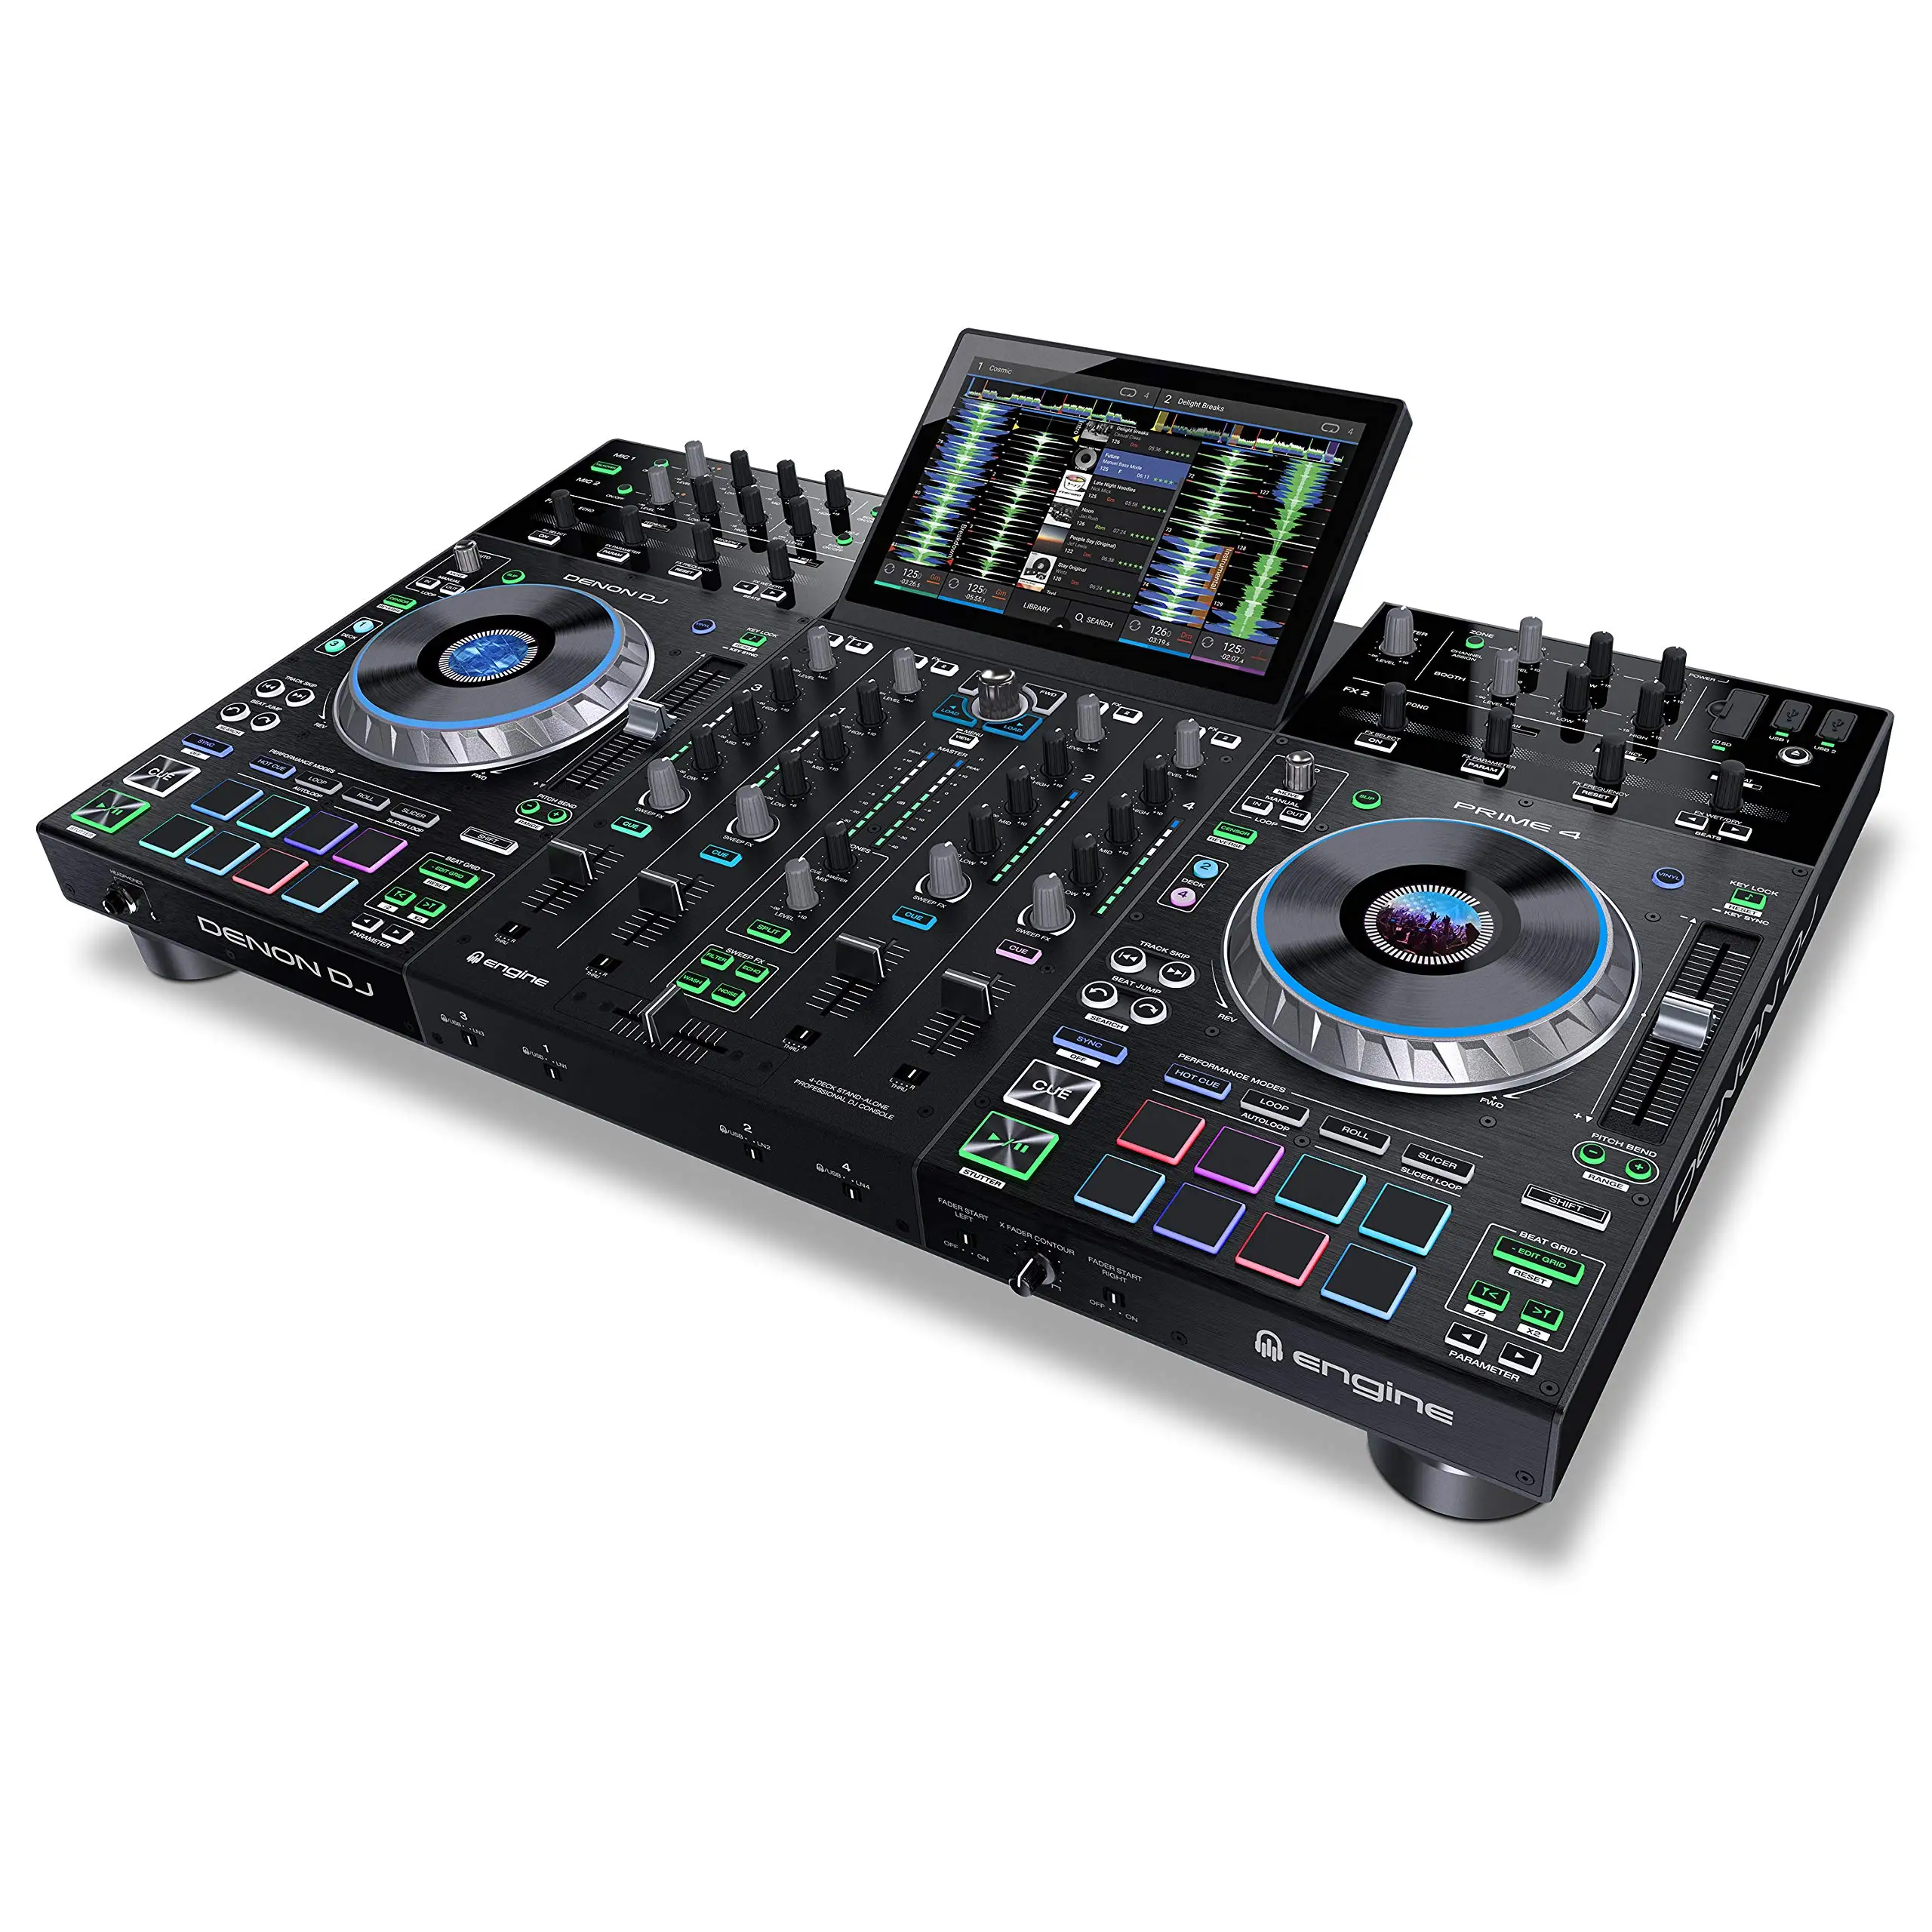 

Basic Sales For Denon Prime 4 4-Deck Standalone DJ Controller System w 10" Touchscreen